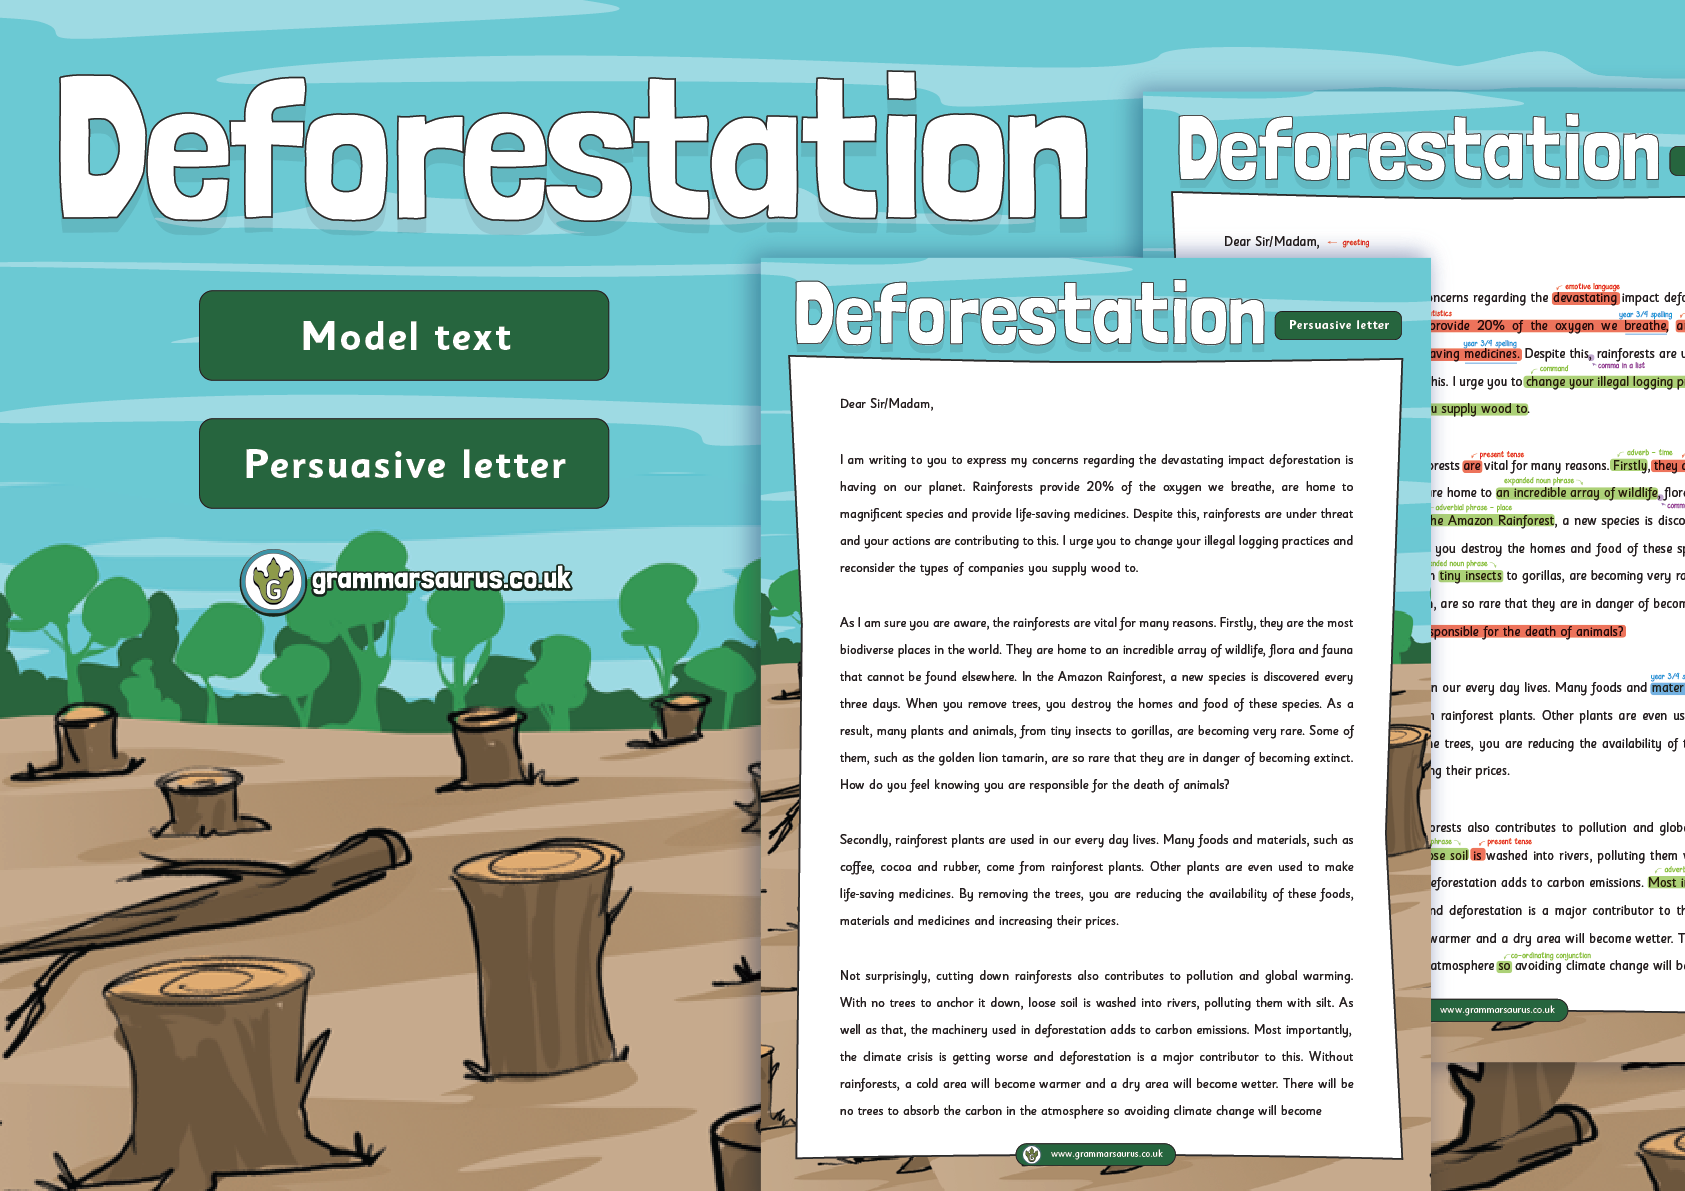 persuasive writing examples rainforest